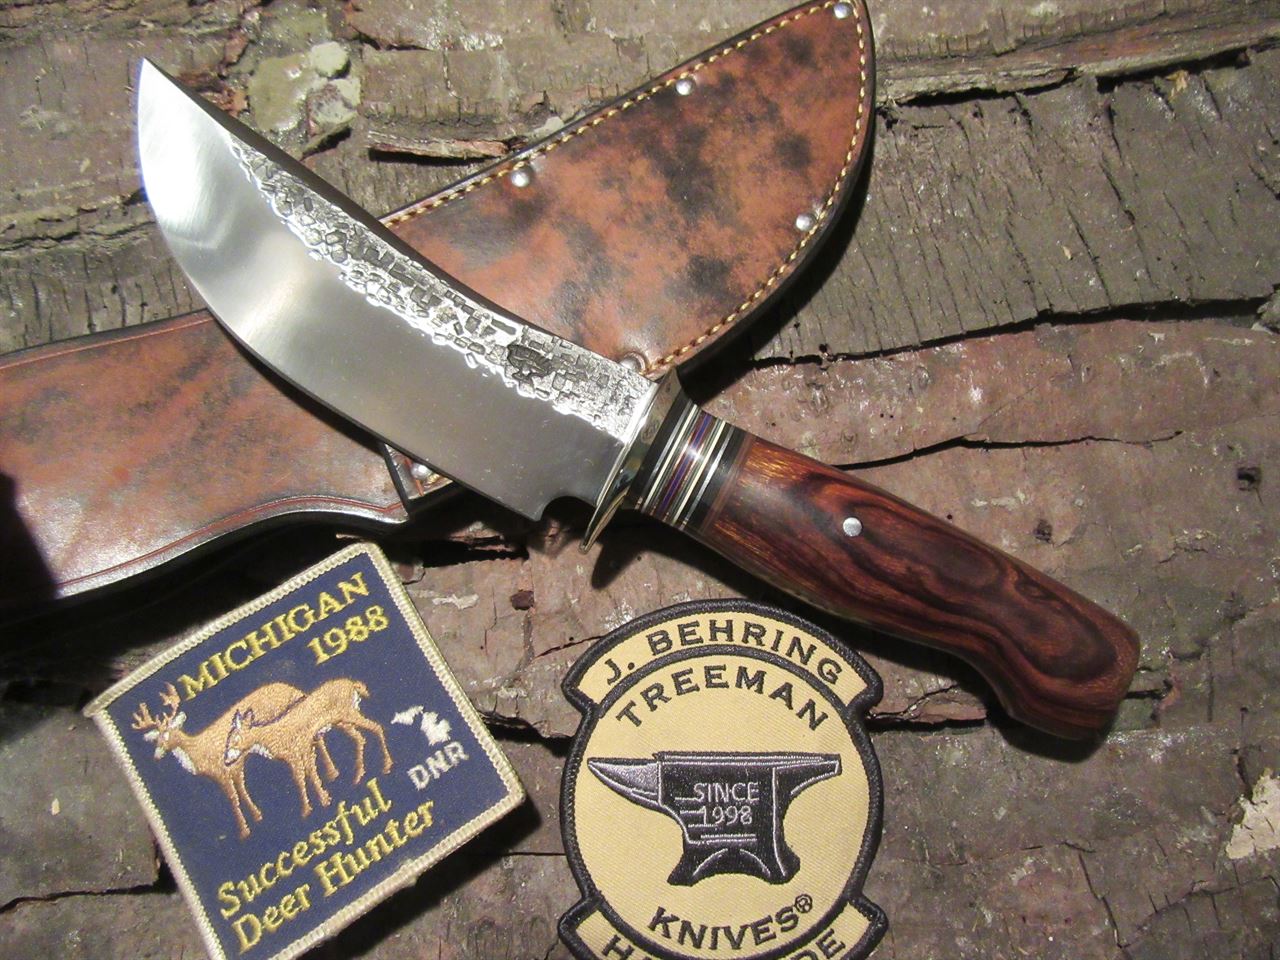 Treeman Hammer Mark Woodcraft Desert Iron Wood Border Patrol style 